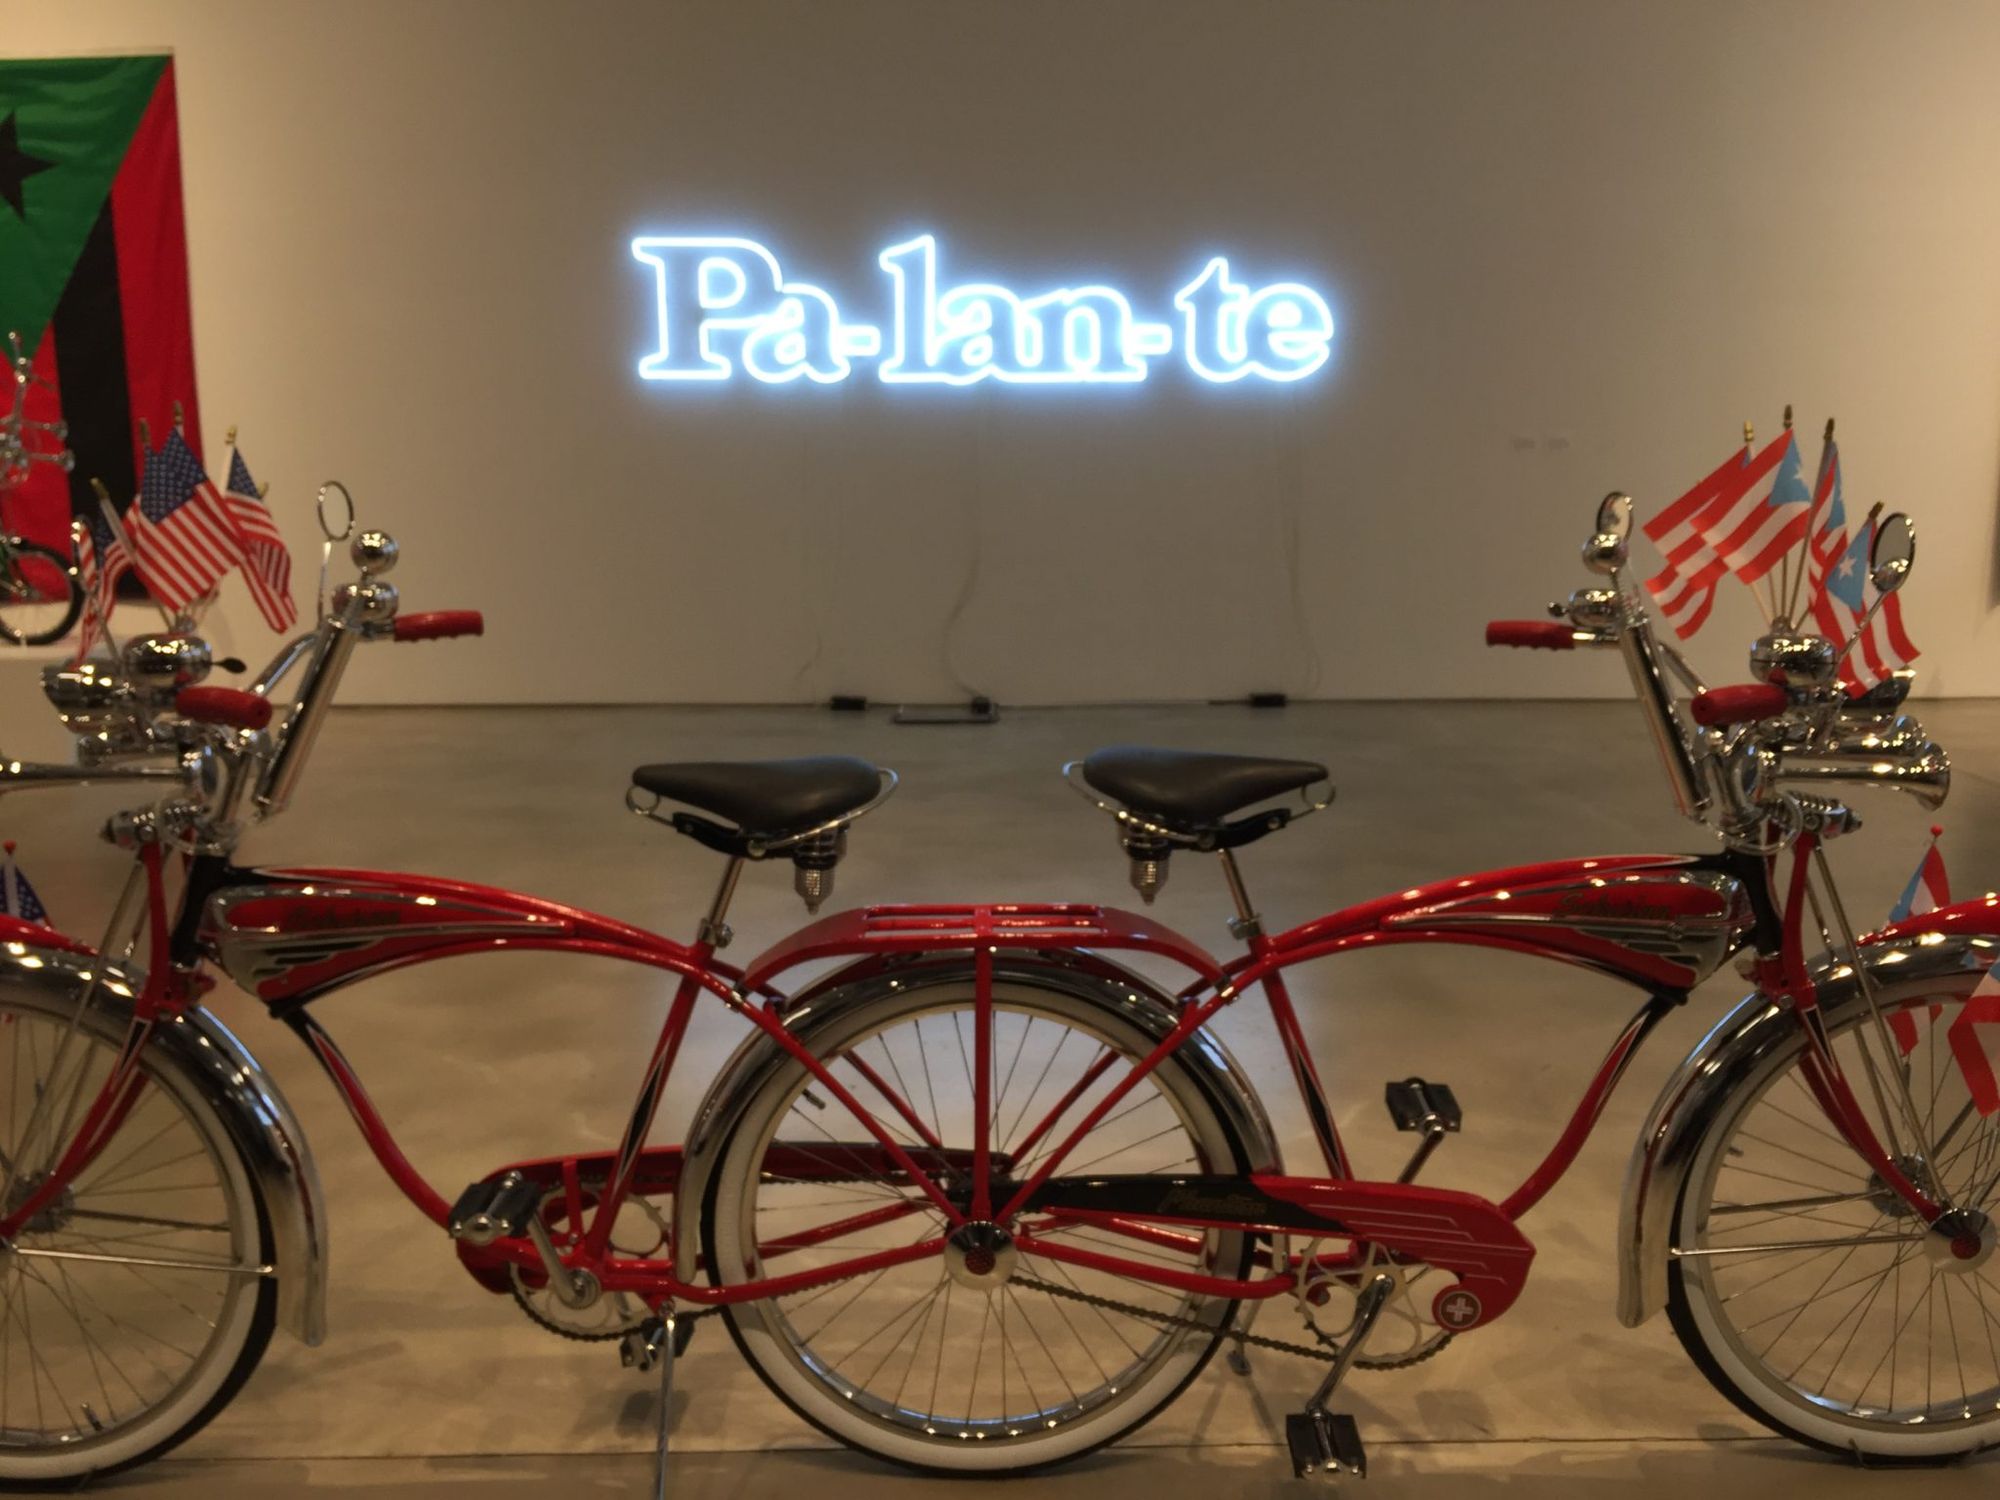 Ride Or Die: Art Exhibition and Bike Meet-Up